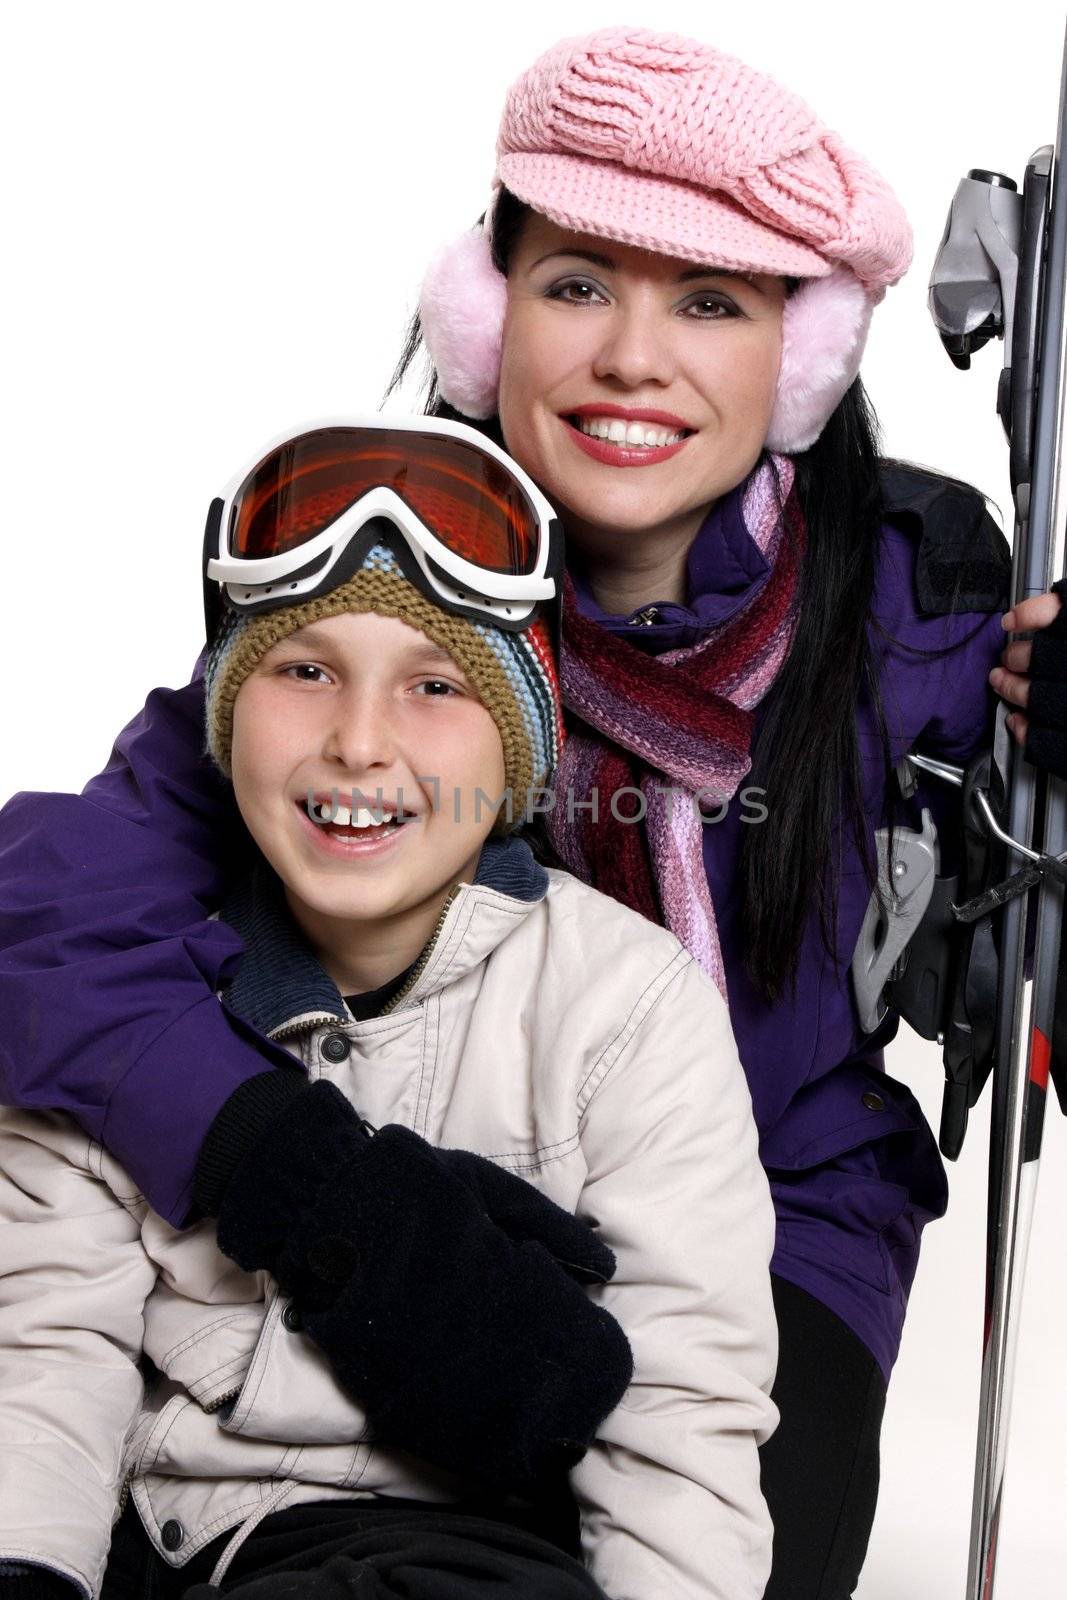 Smiling people in winter ski gear